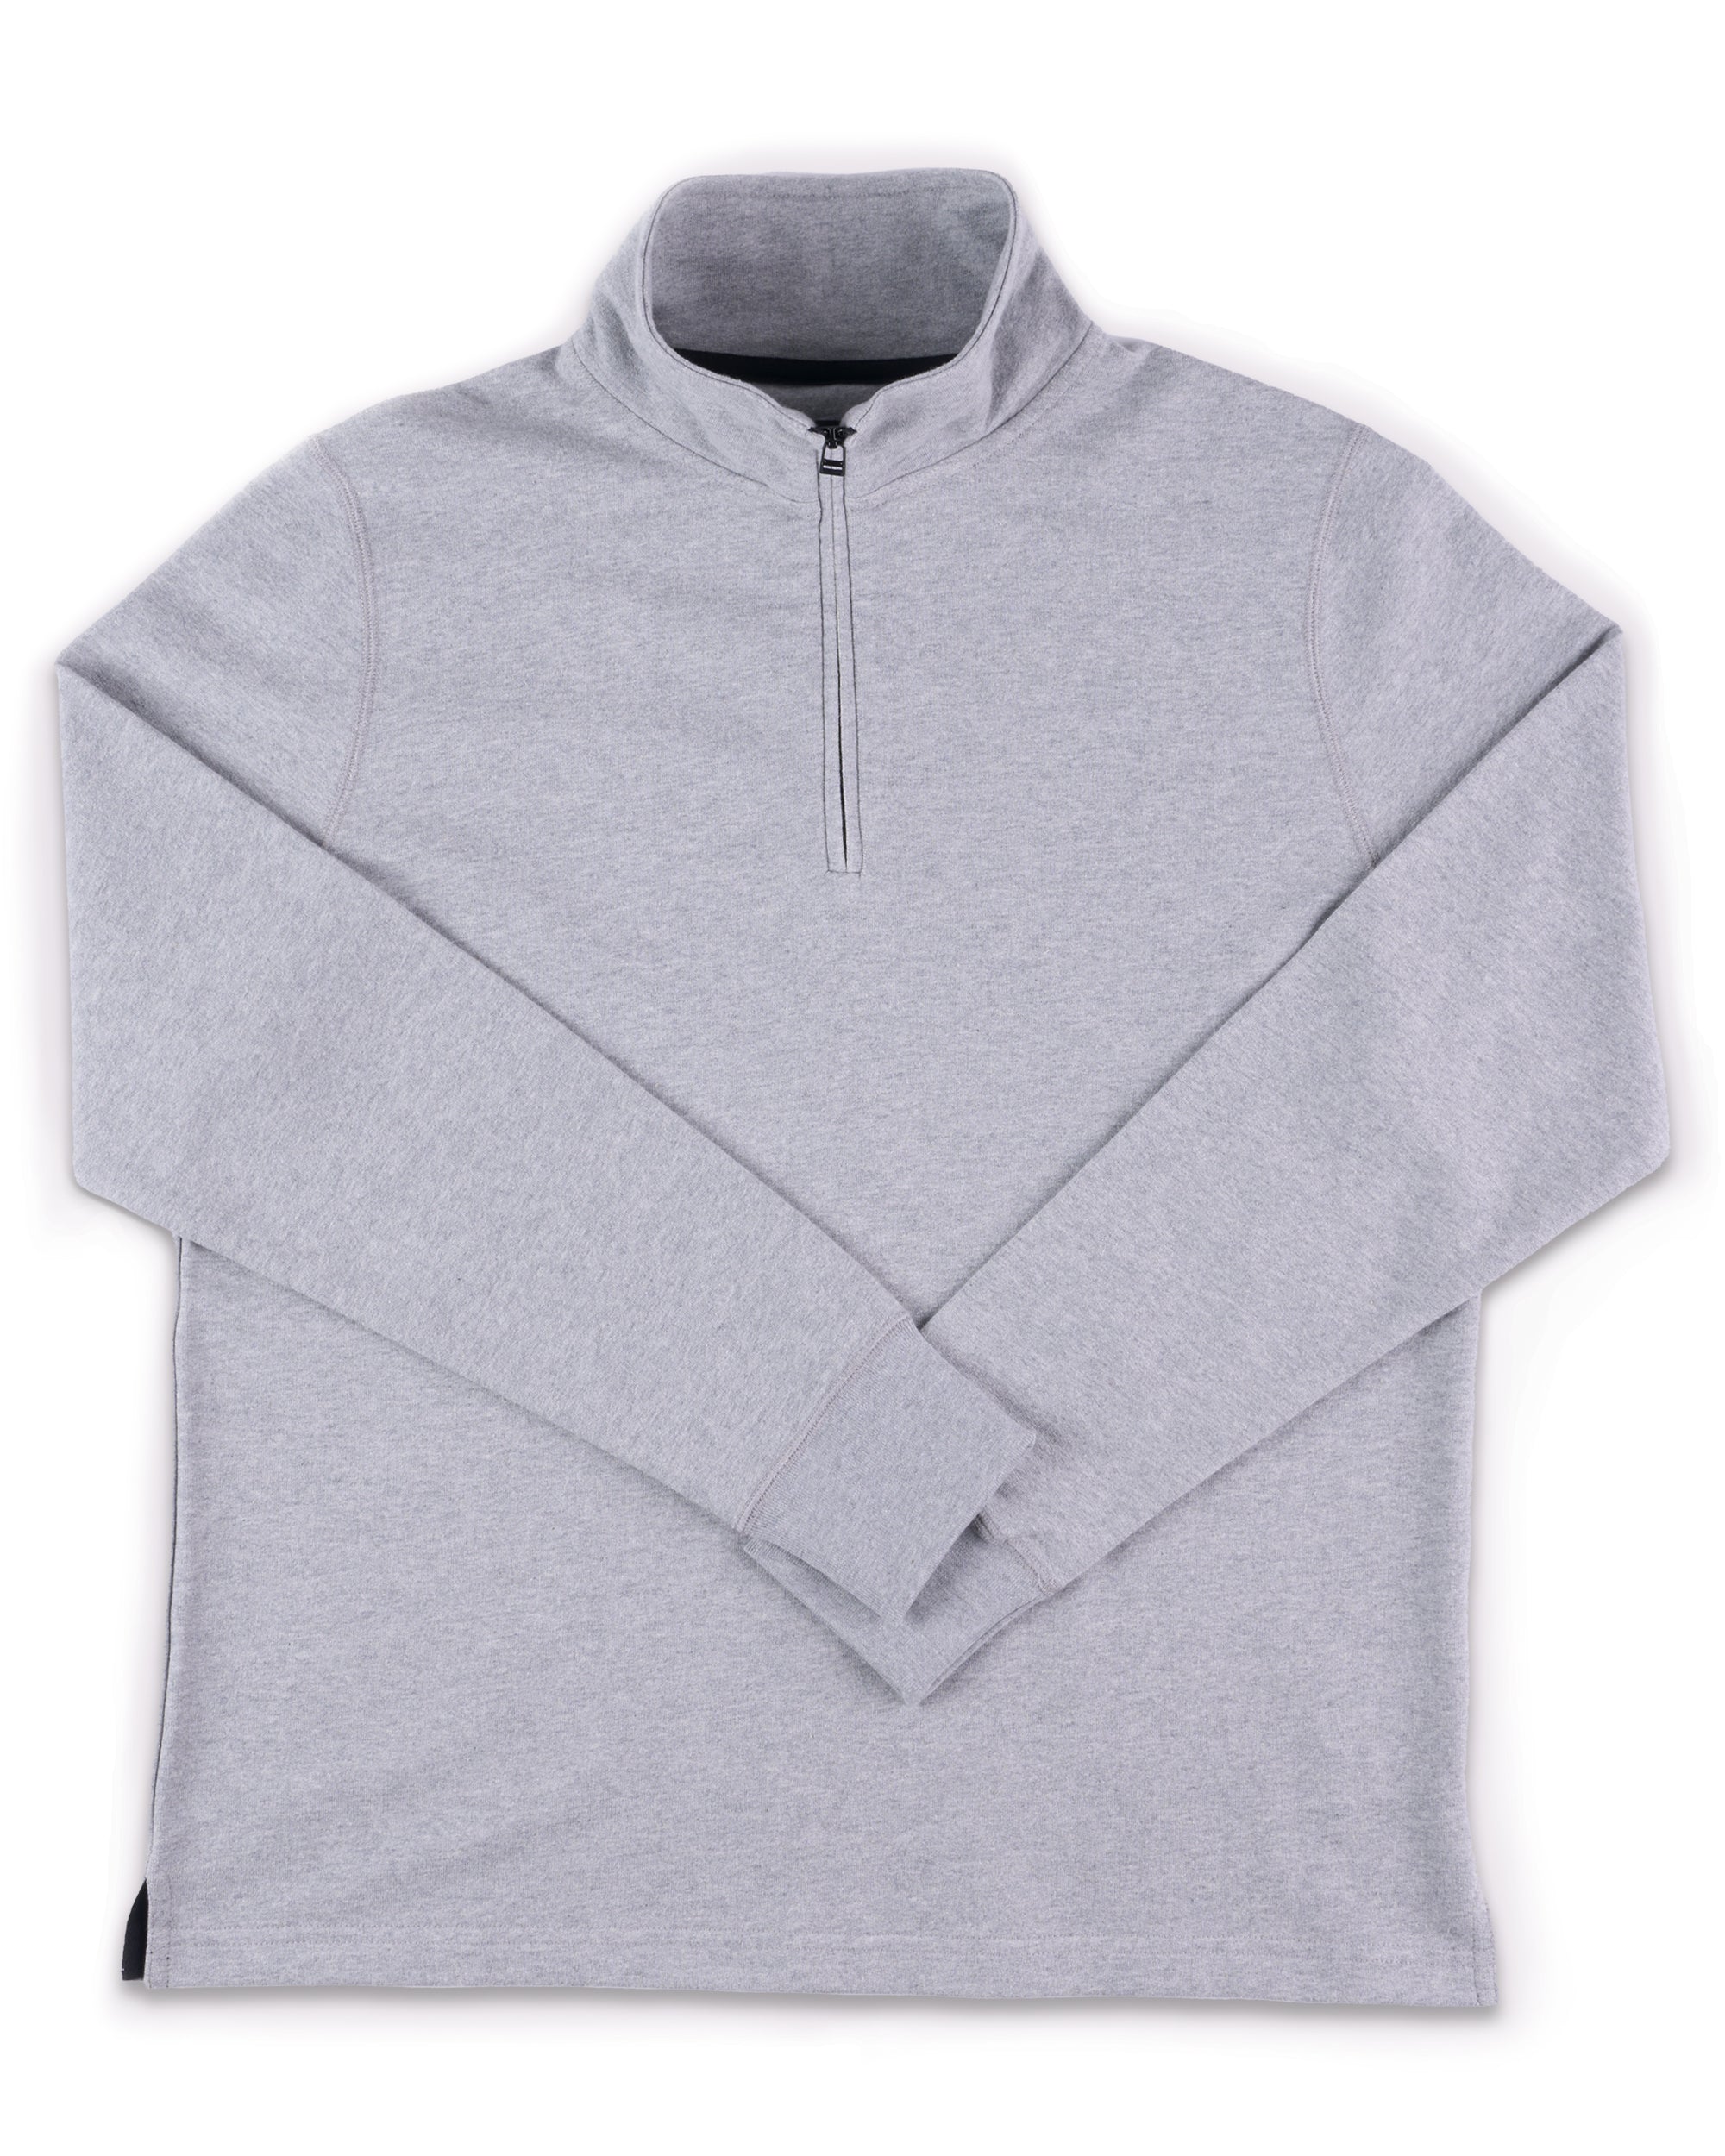 1/4 Zip Sweatshirt Grey - Foreign Rider Co.